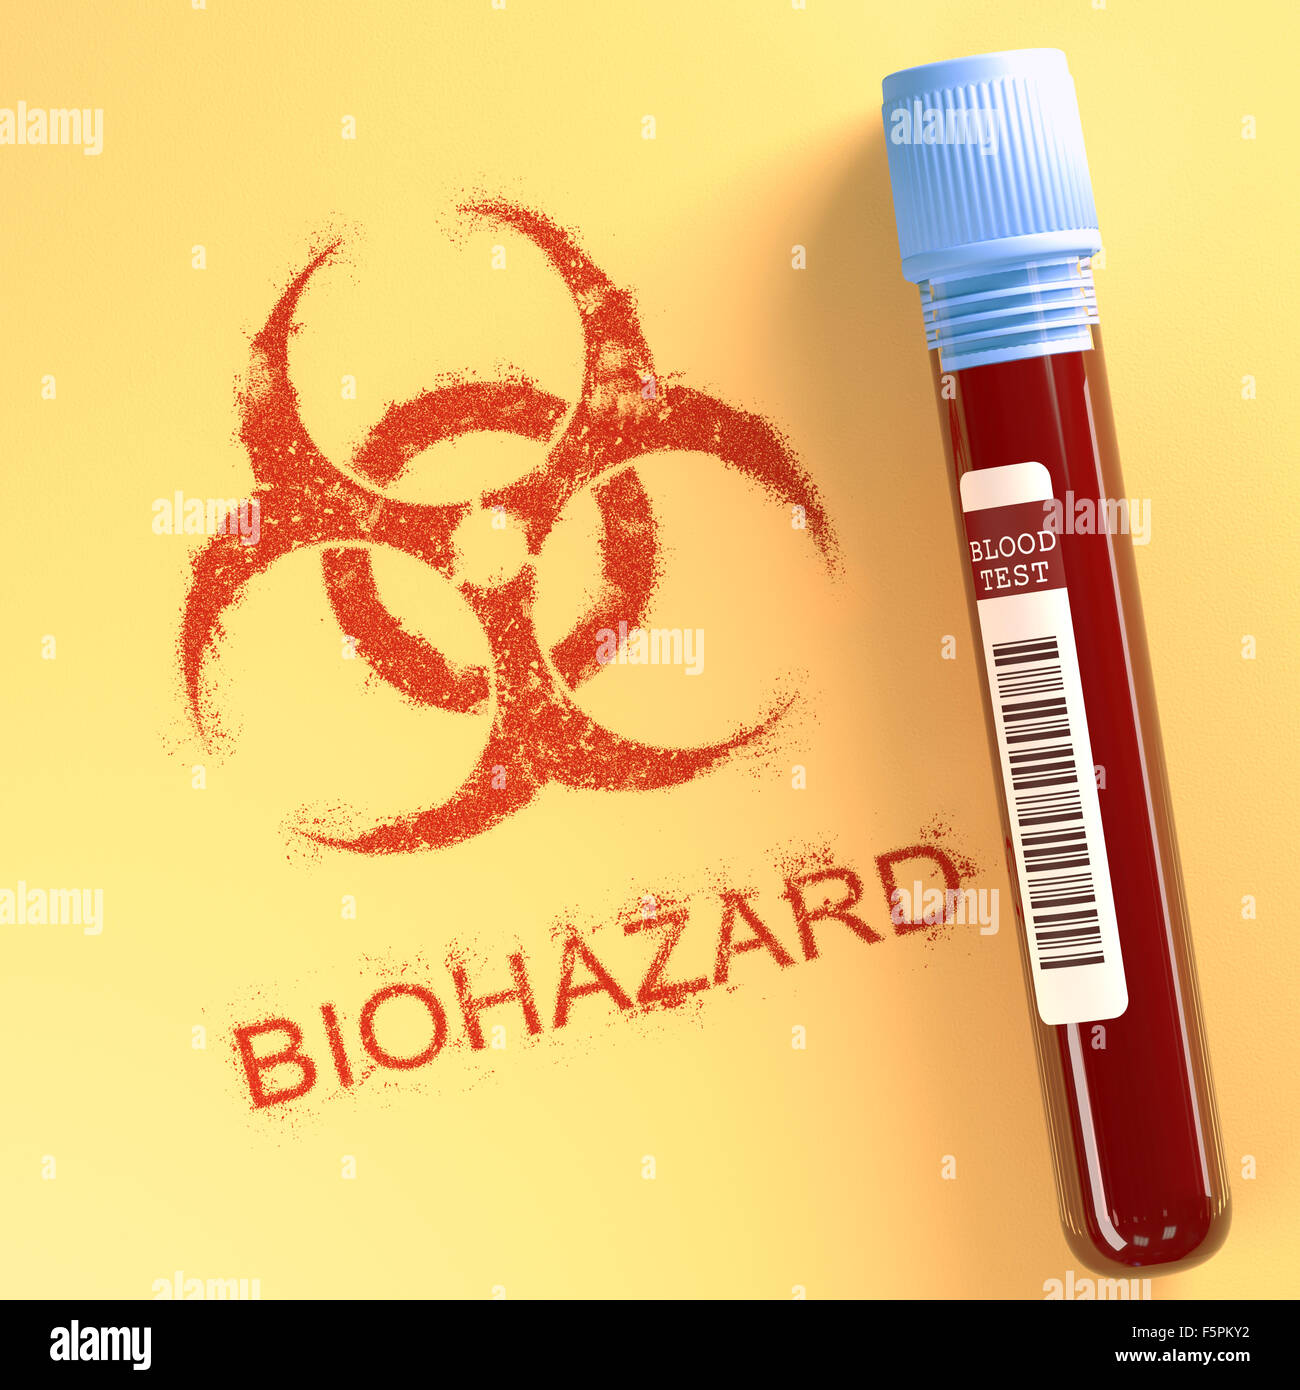 Test tube with contaminated blood, illustration. Stock Photo